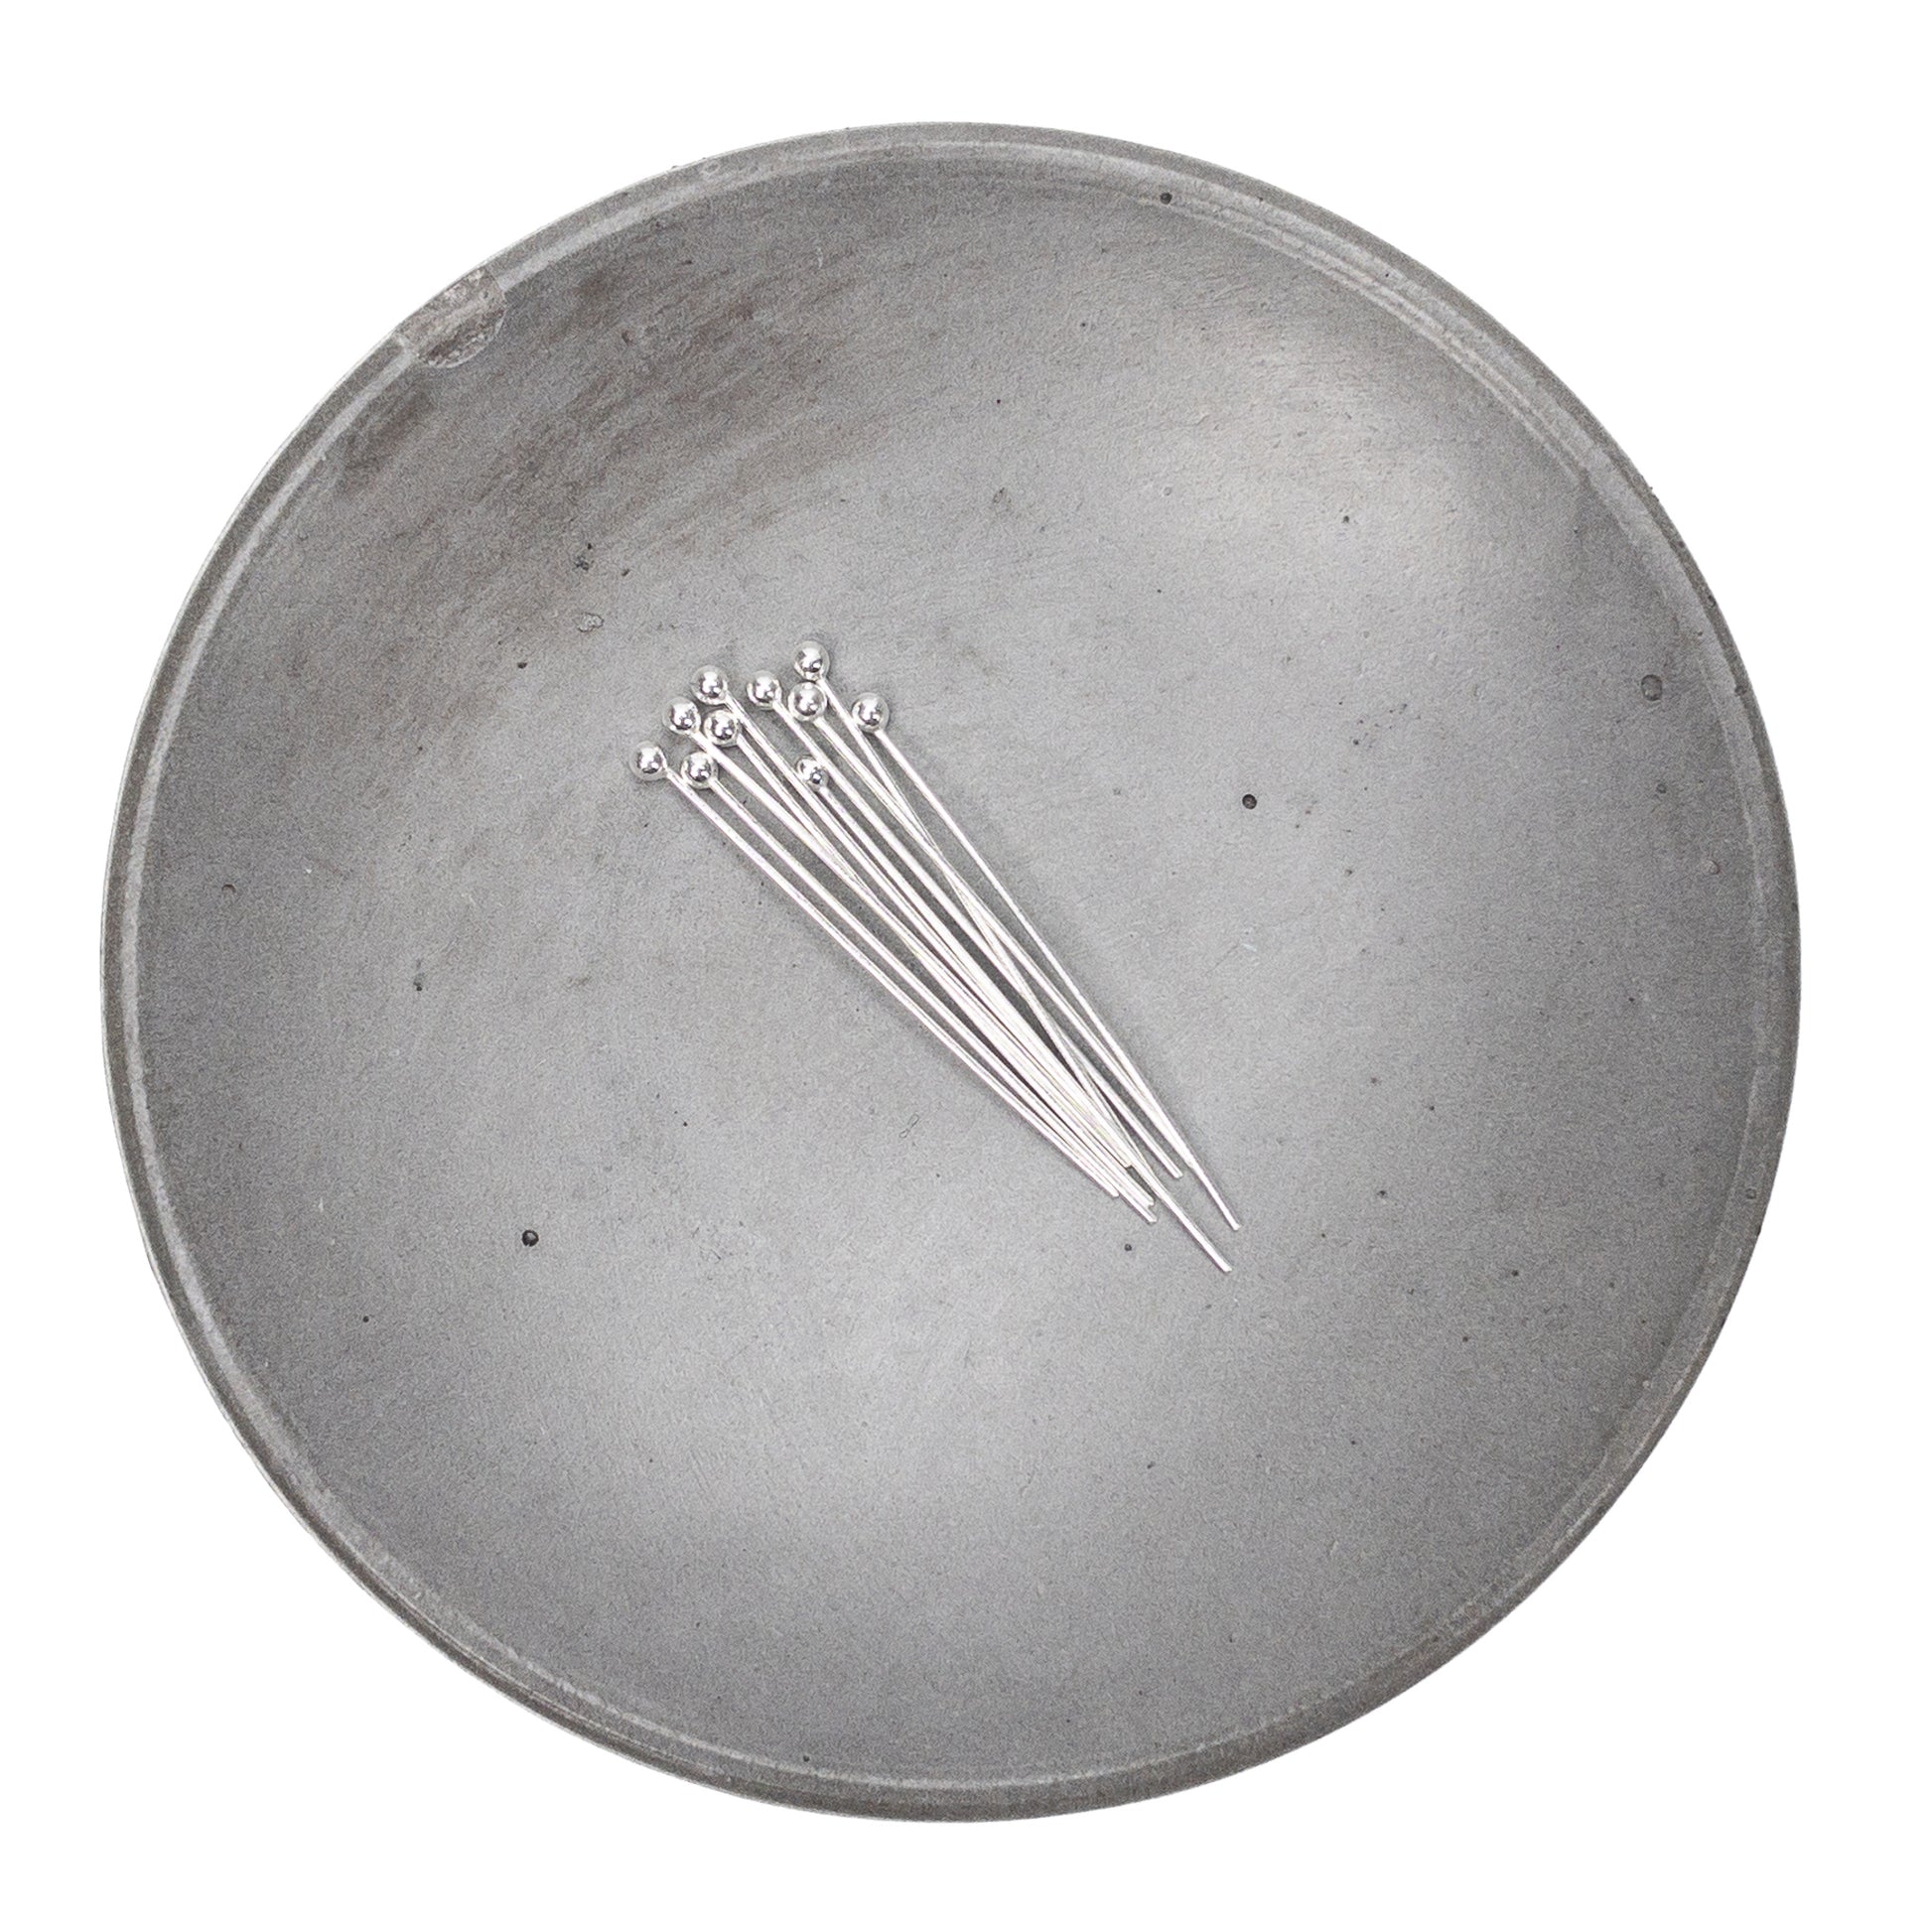 Headpin - 1.5" 26-Gauge BALL (2 Metal Options) - 10 pcs.-The Bead Gallery Honolulu